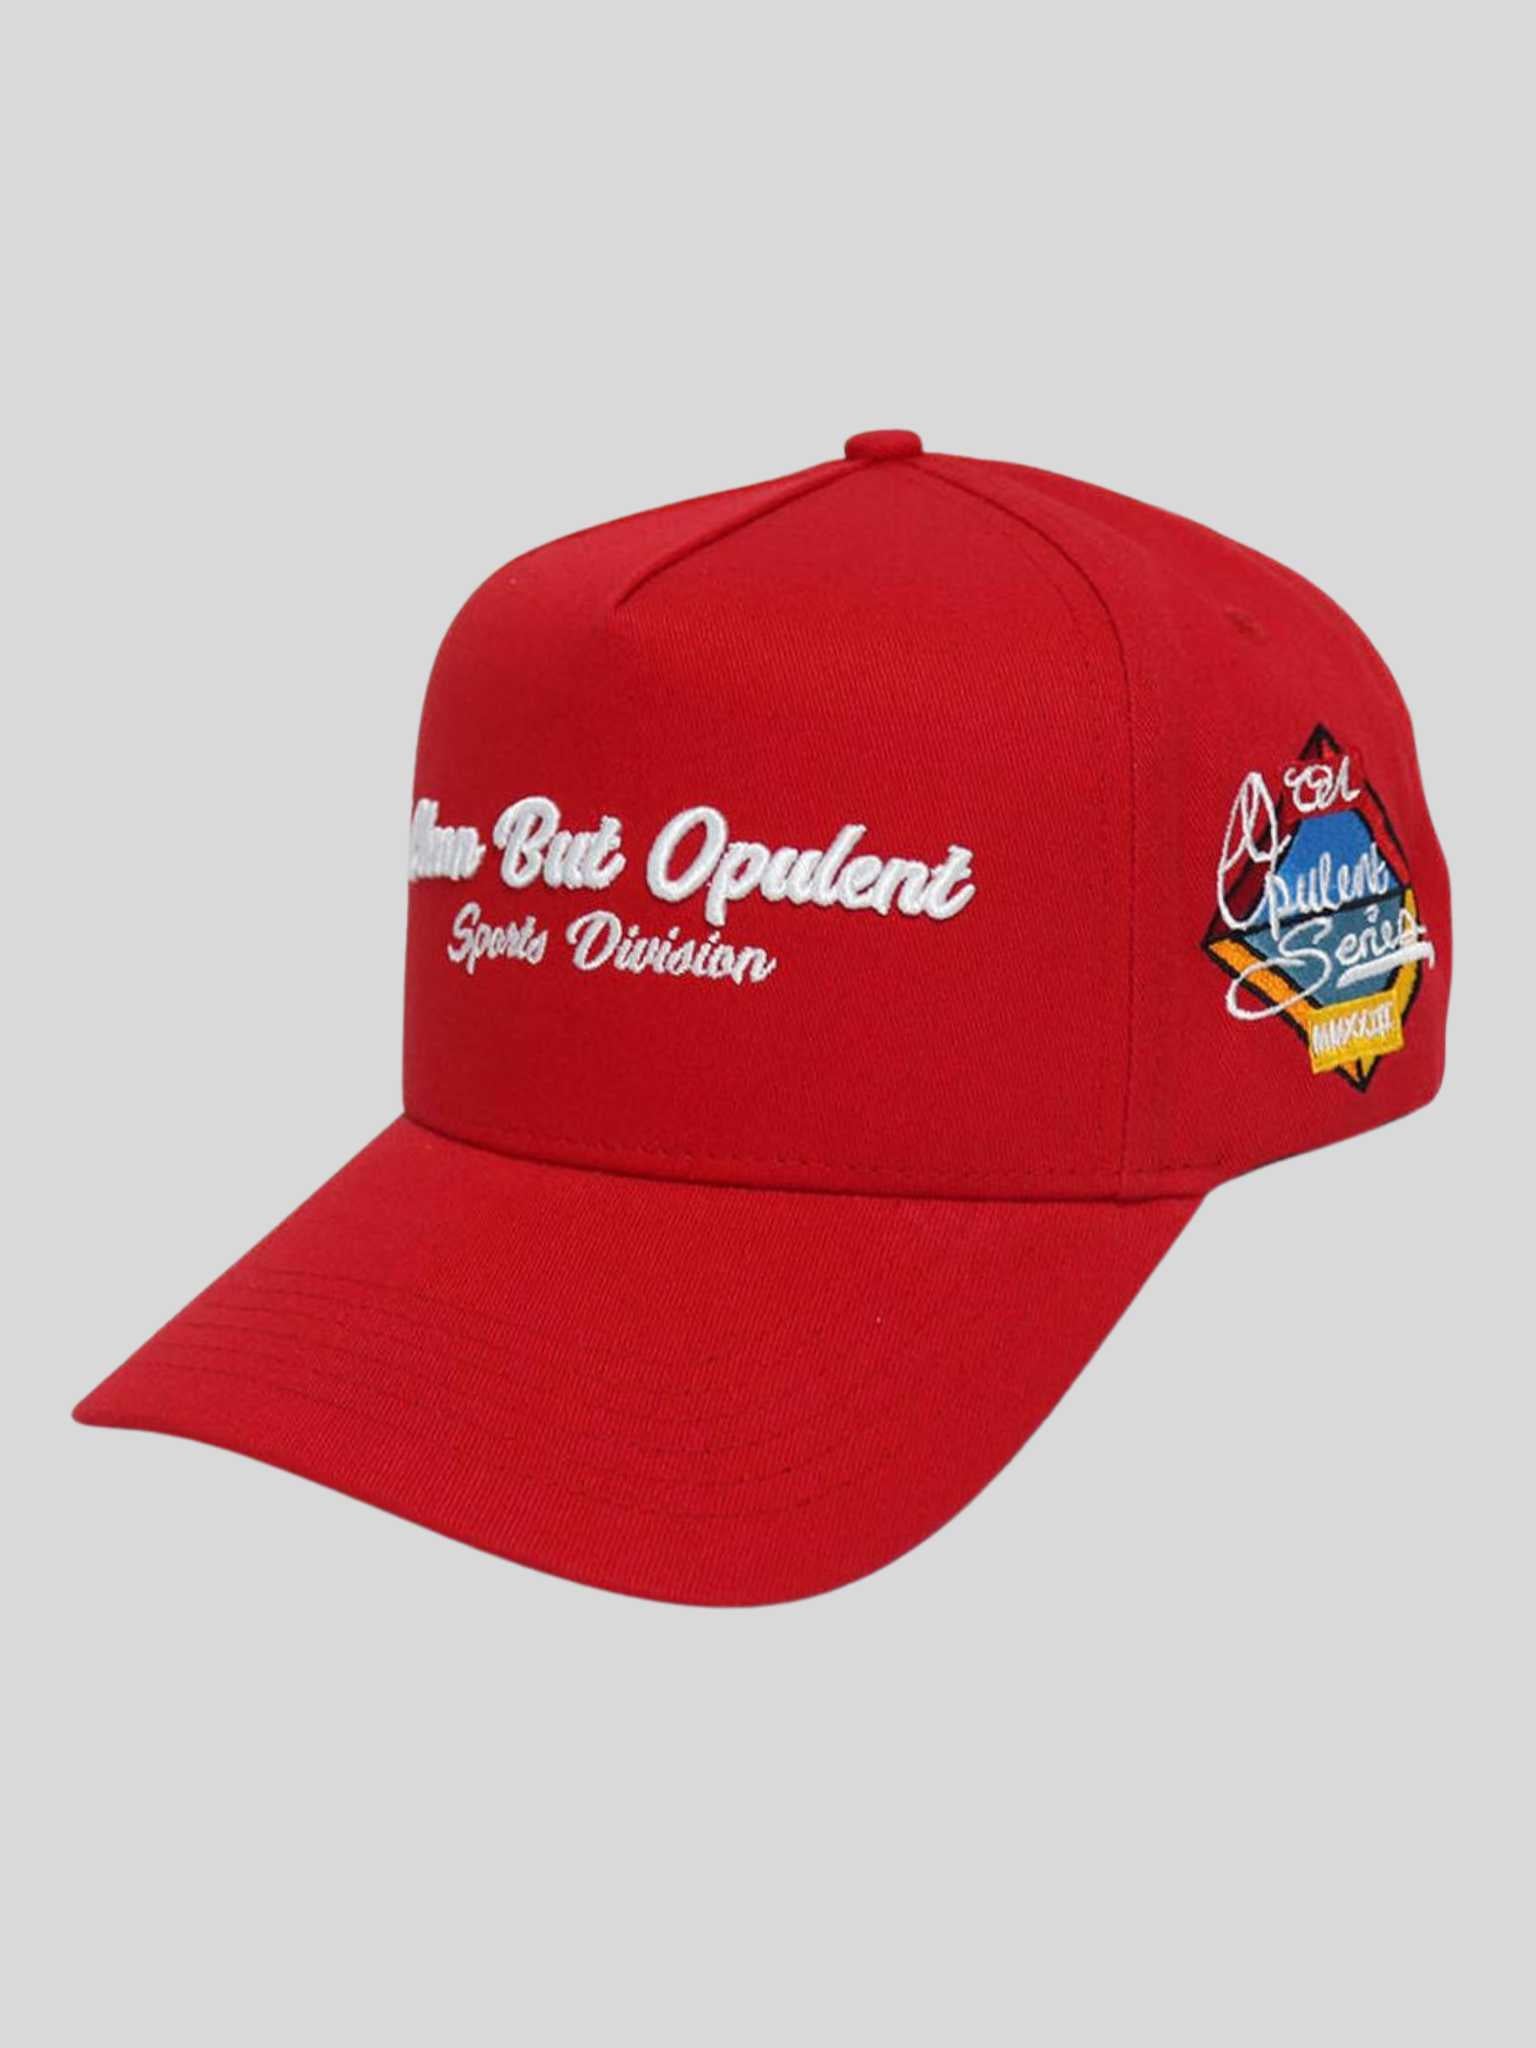 CBO Sports Division Baseball Cap - Red Opulent Apparel